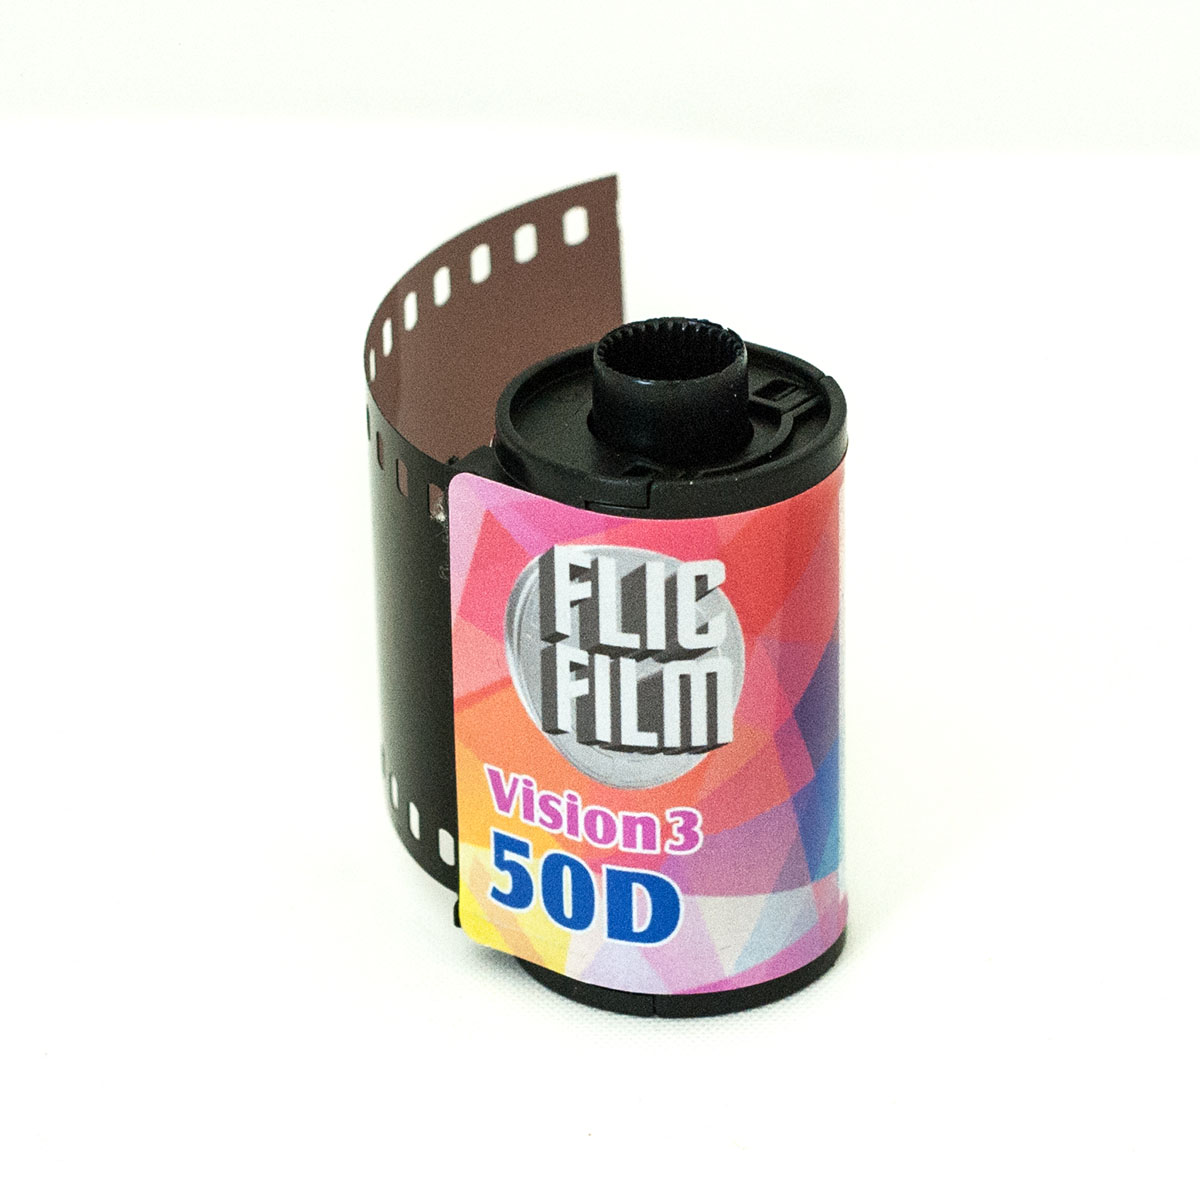 Flic Film – Vision3 50D 35mm Film (36exp.) – Beau Photo Supplies Inc.